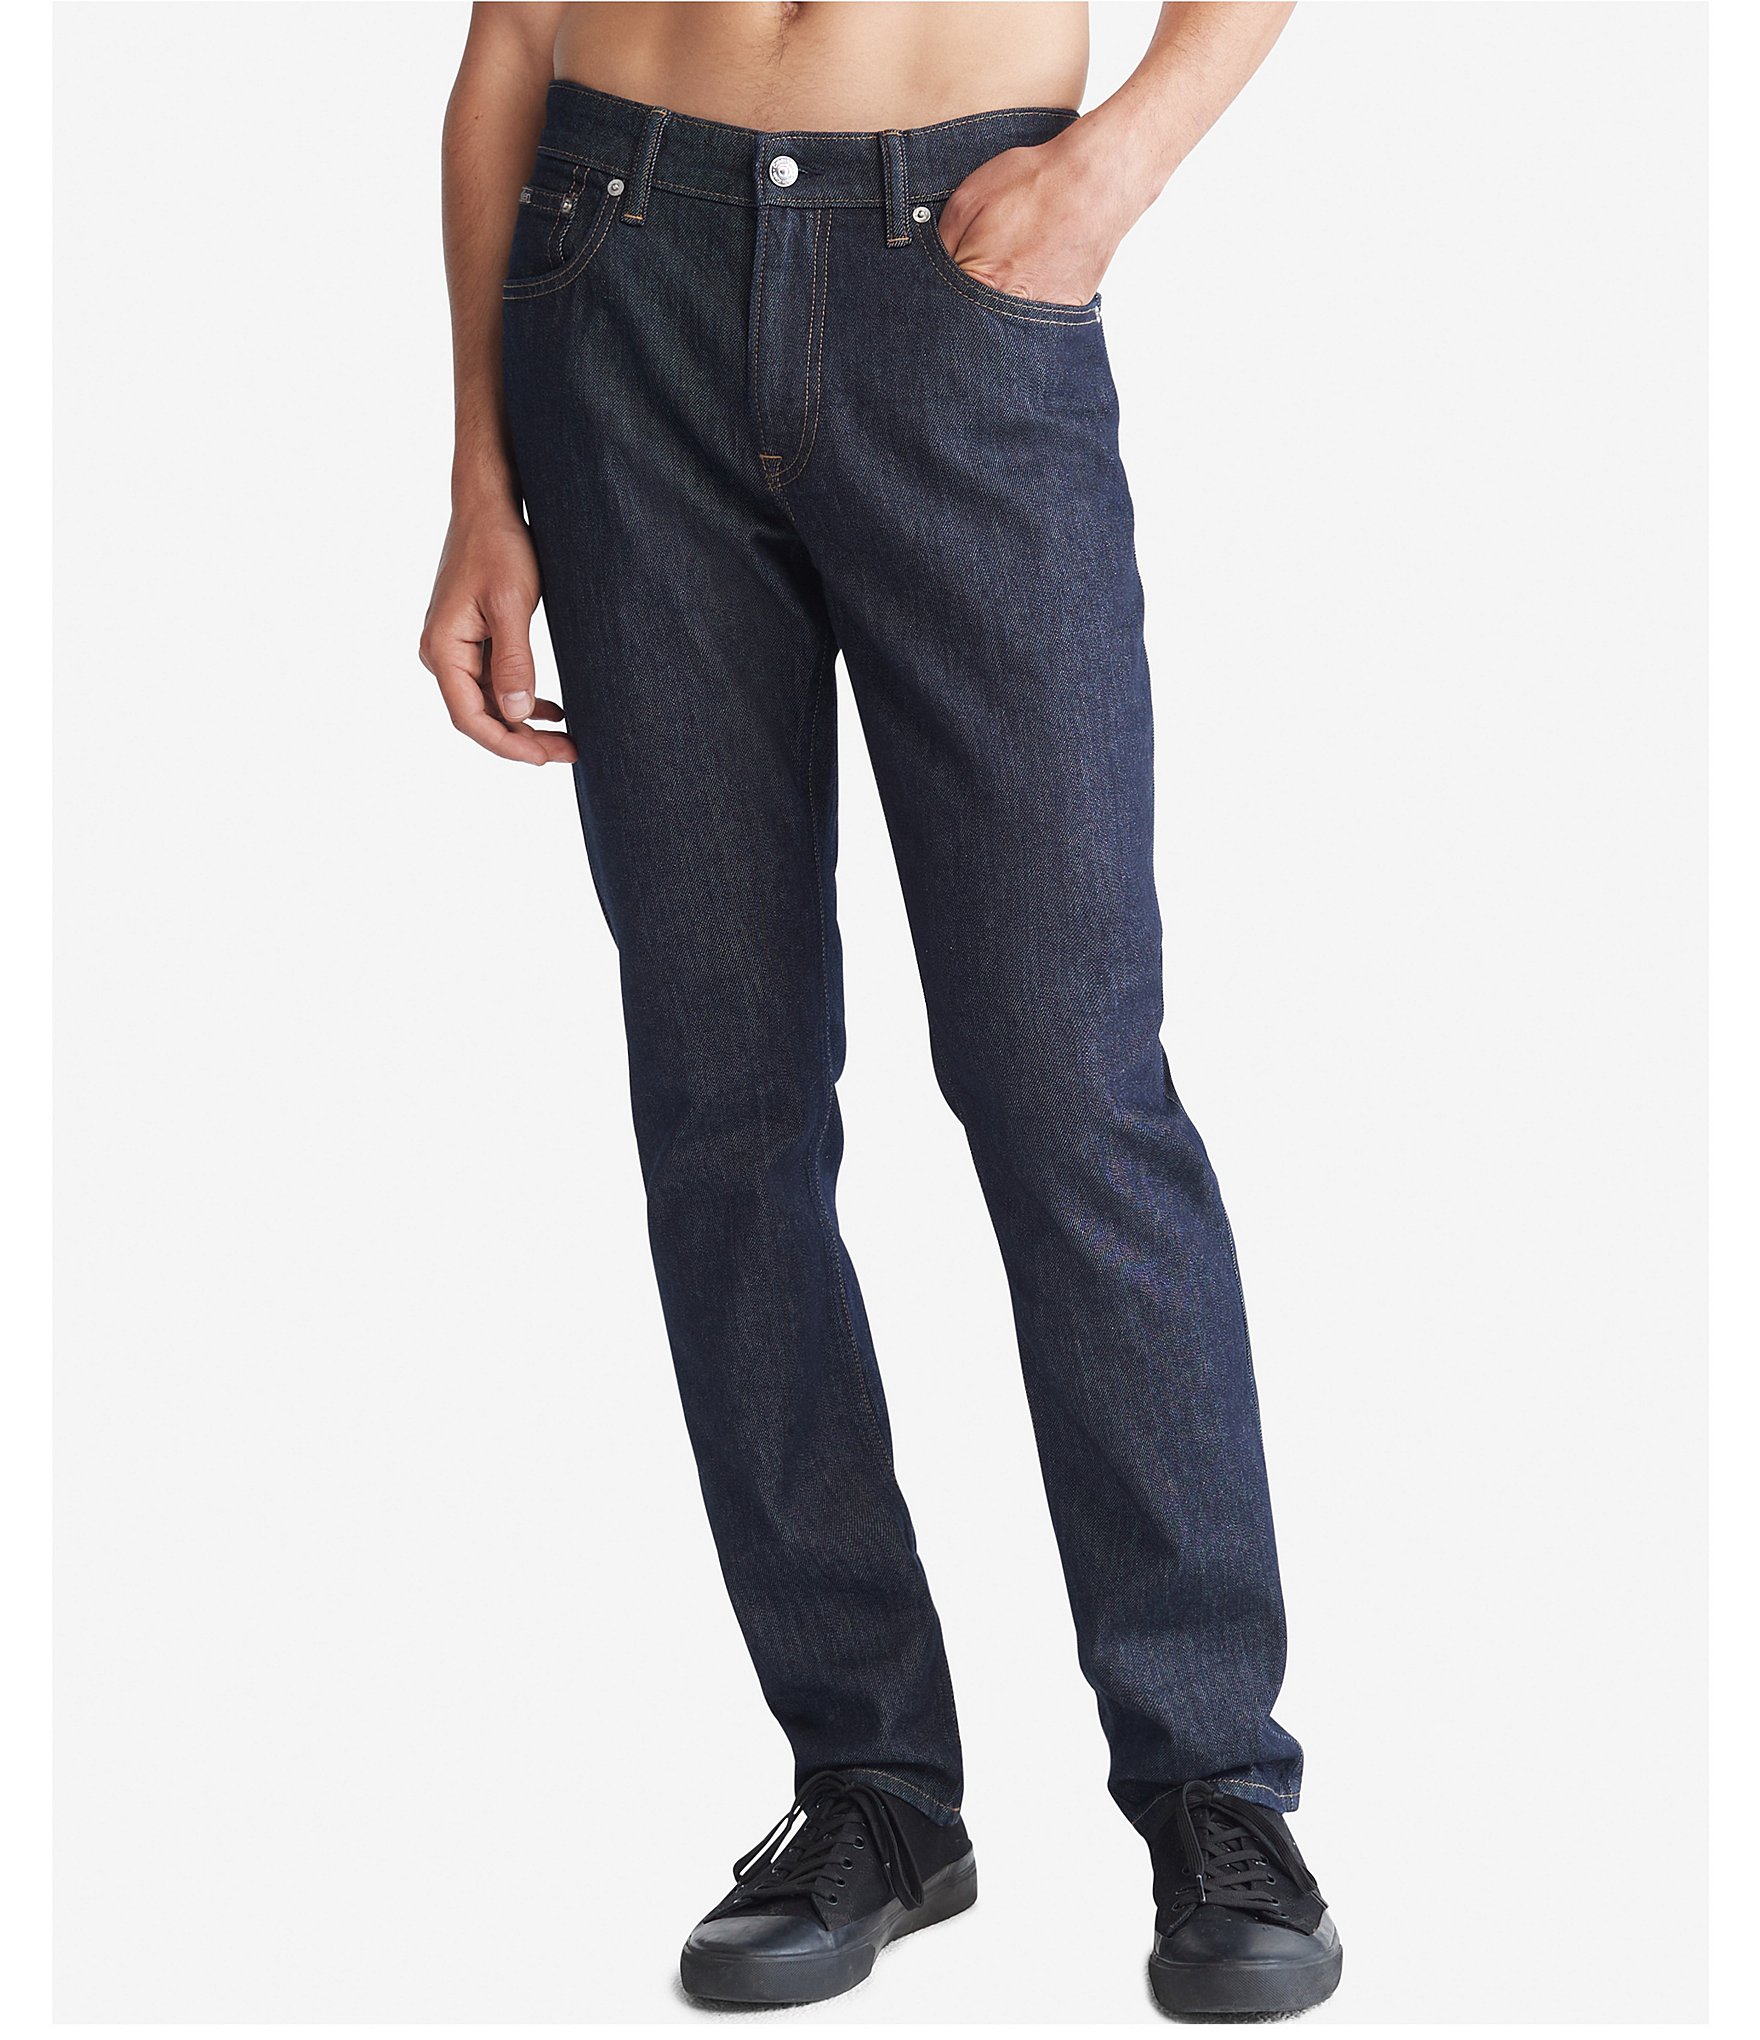 Calvin Klein Men's Slim Fit Jean, Hourglass, 28W x 32L at